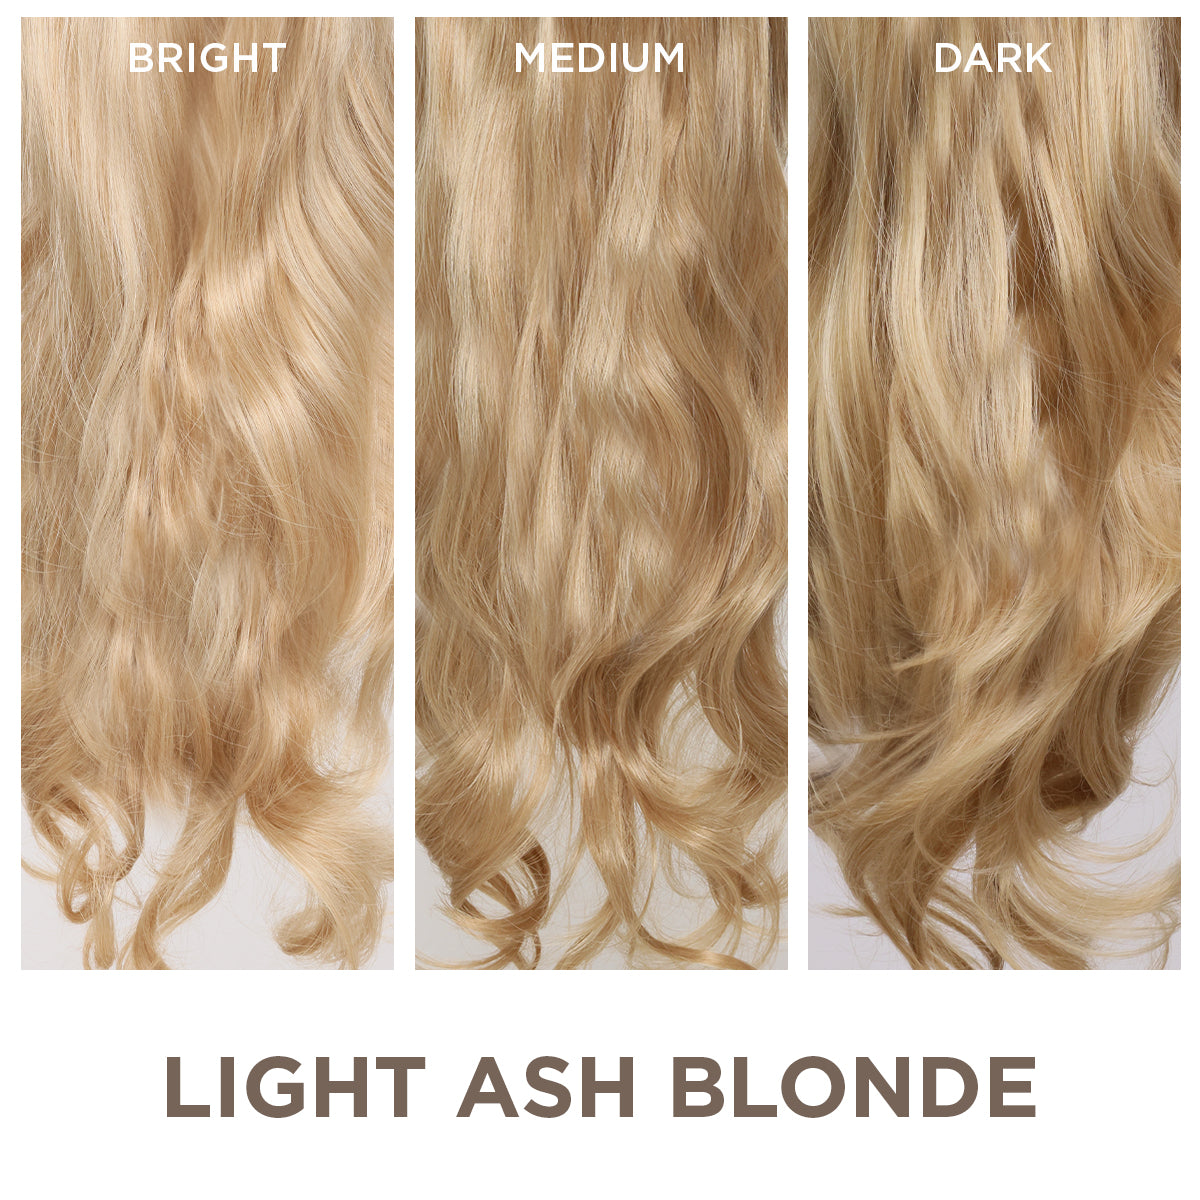 Light Ash Blonde